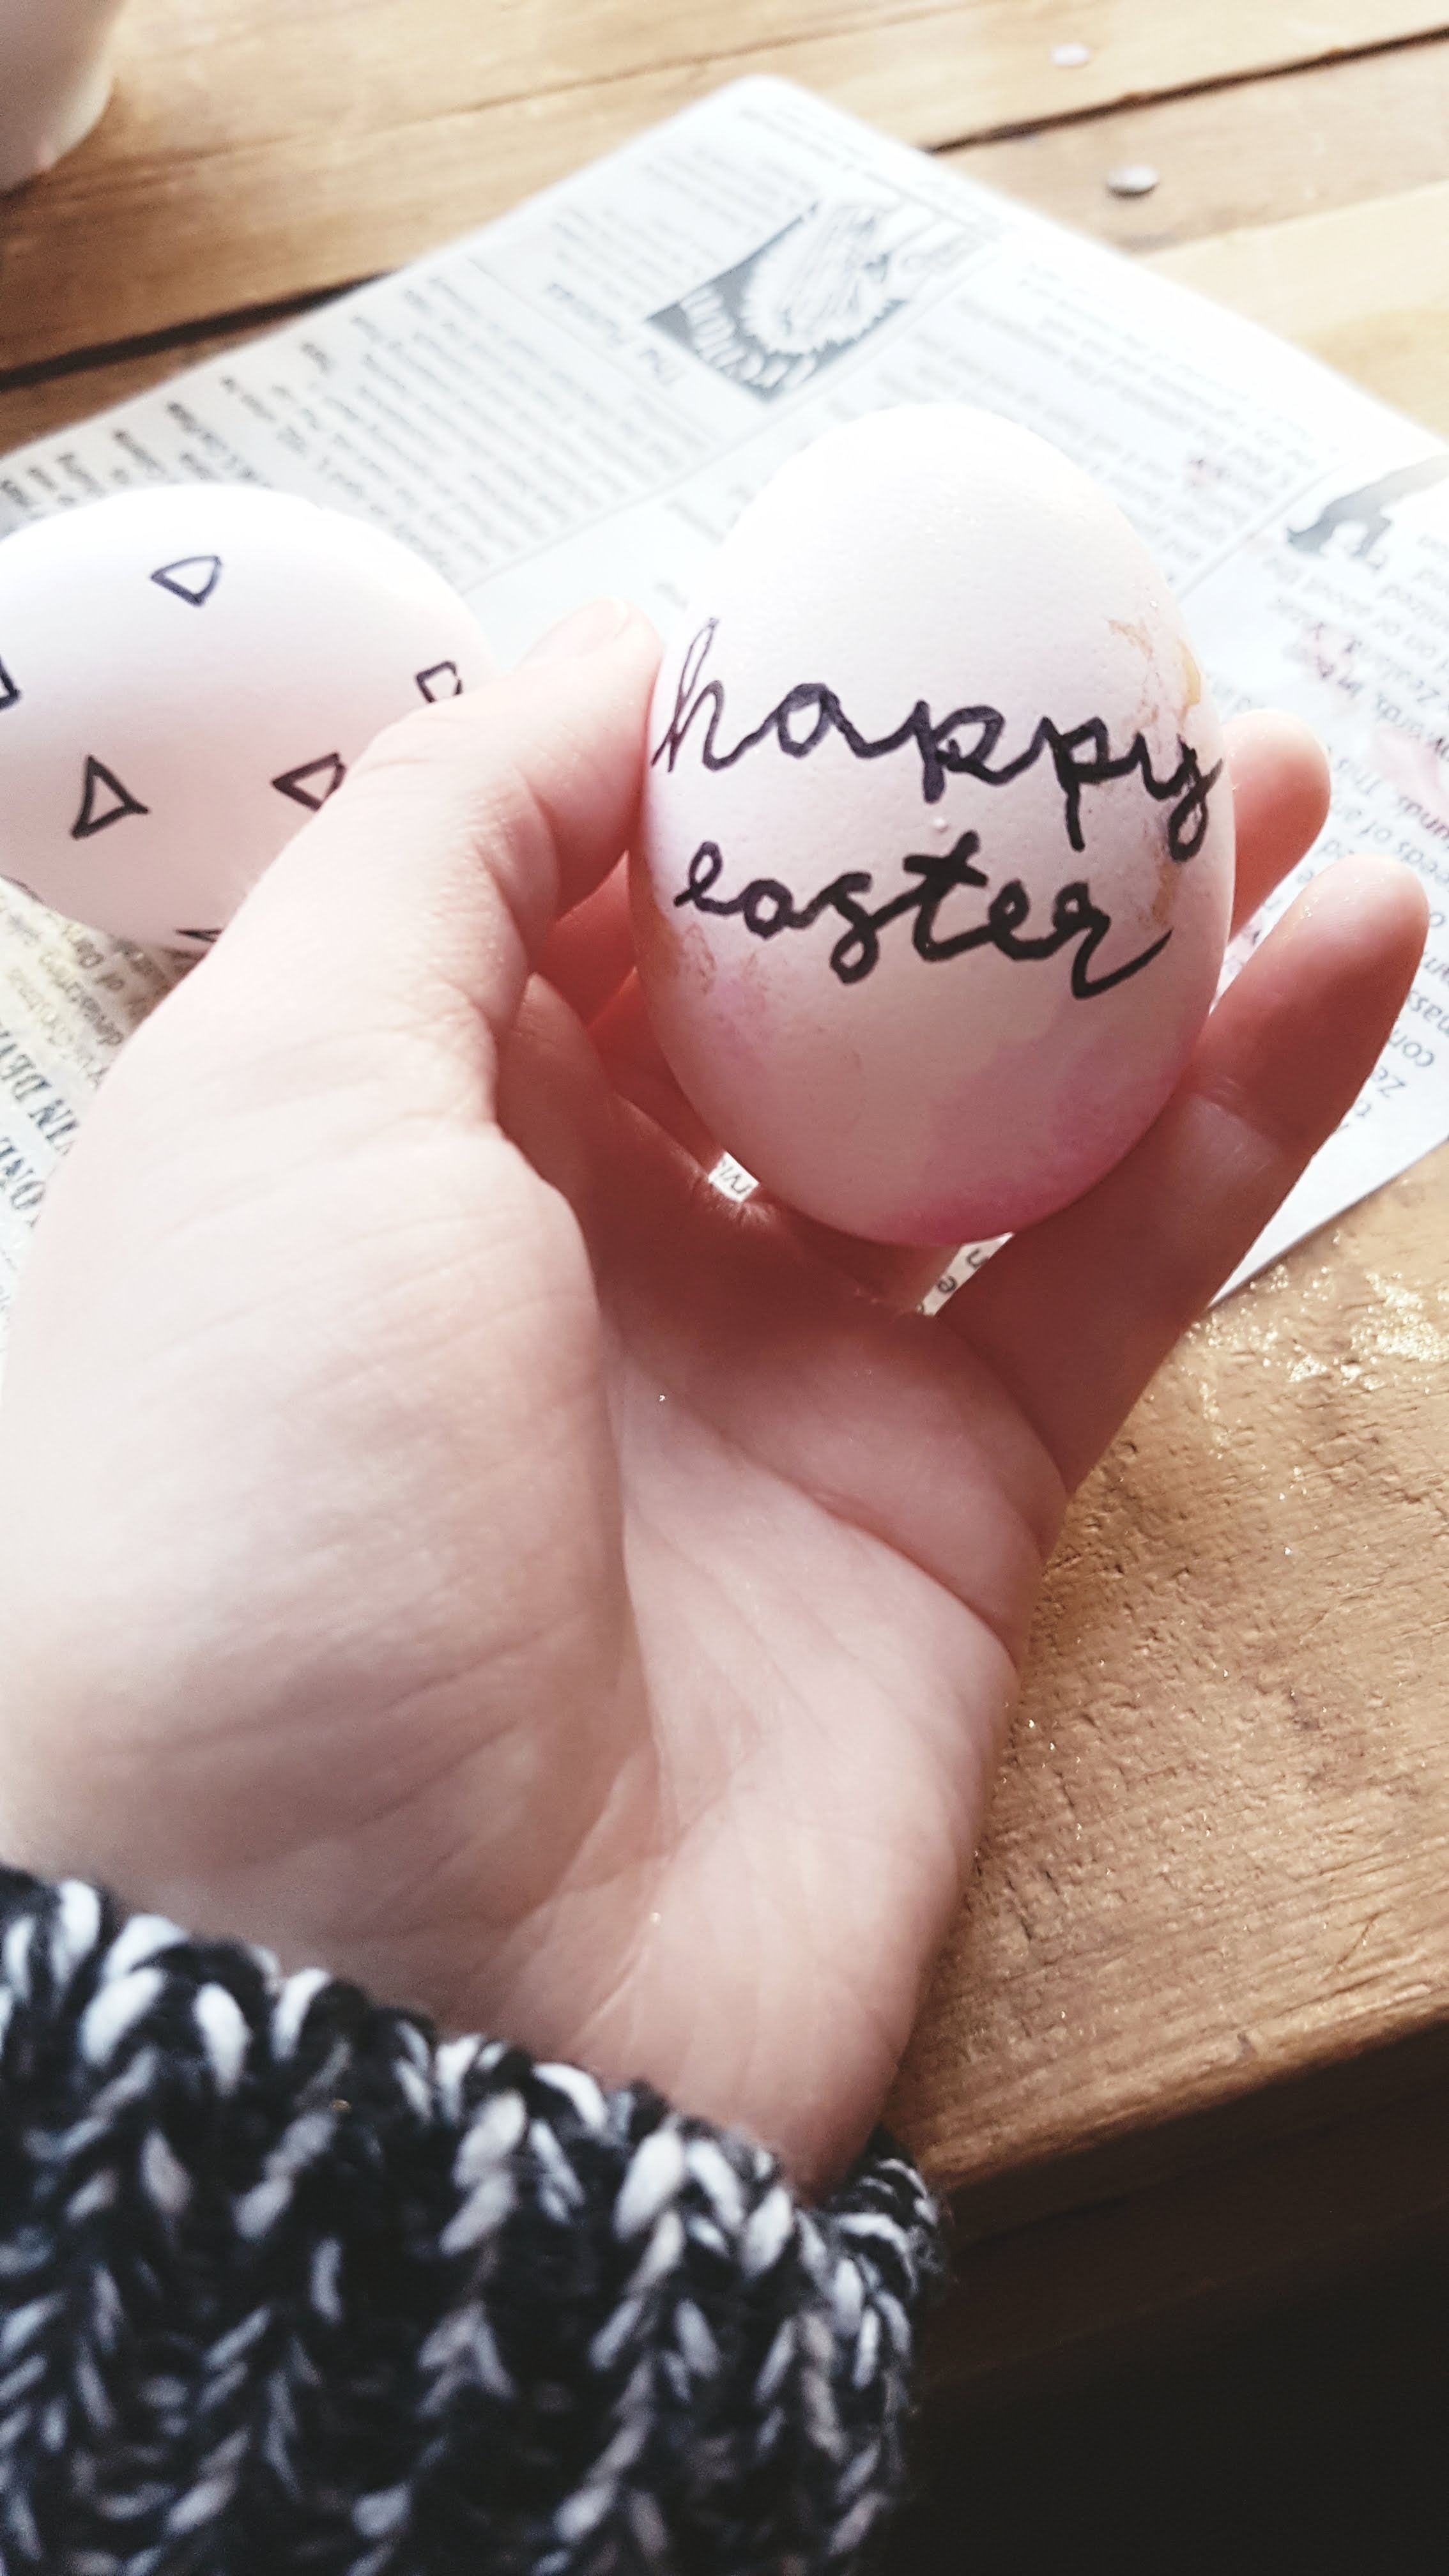 An egg that has "Happy Easter" written on it.